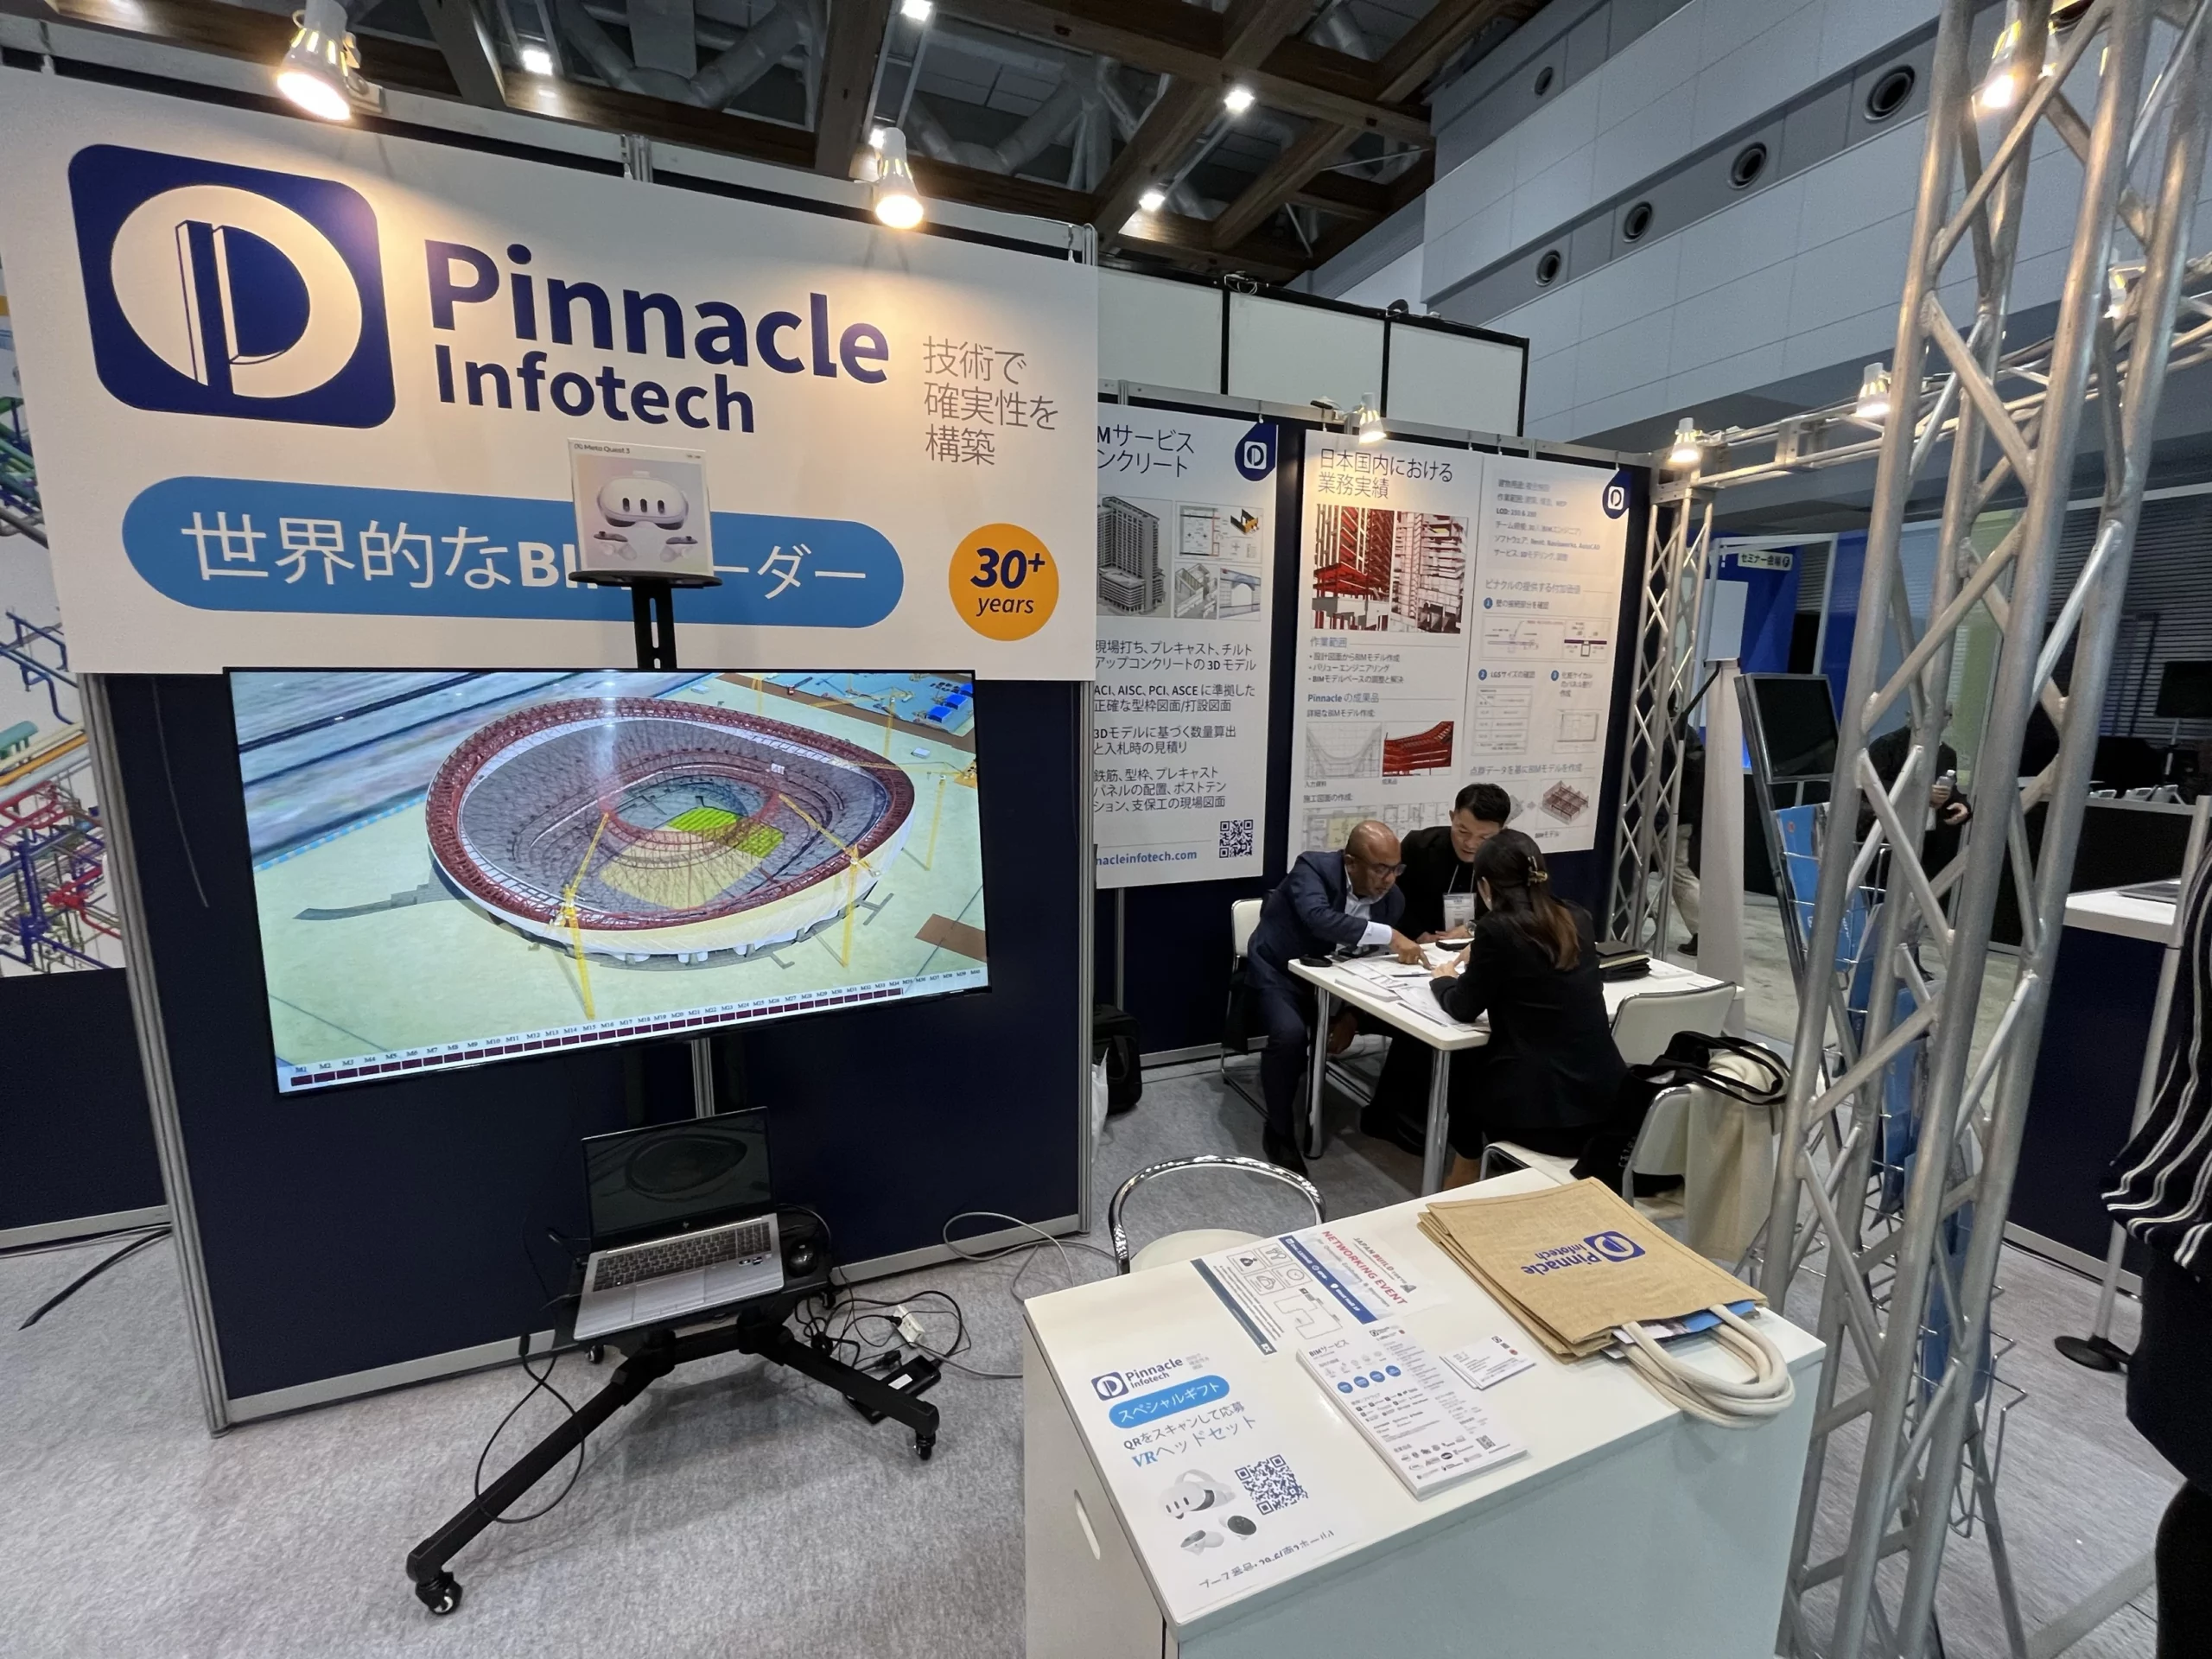 Pinnacle Japan Build Expo image 12